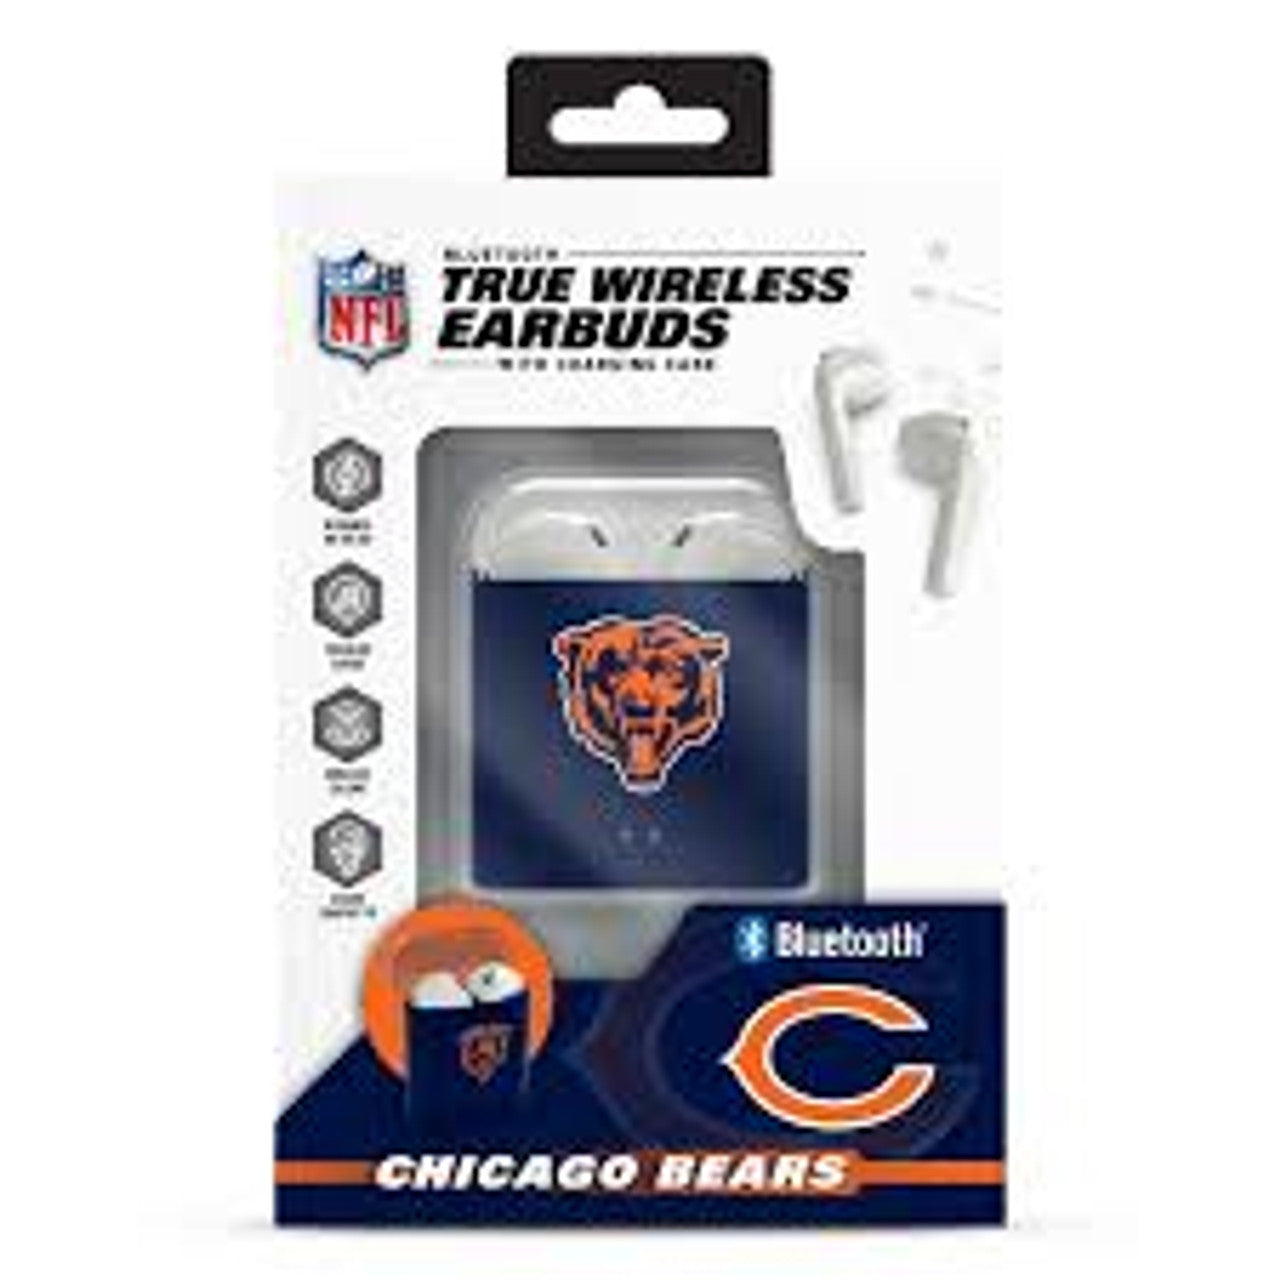 Chicago Bears True Wireless Bluetooth Earbuds